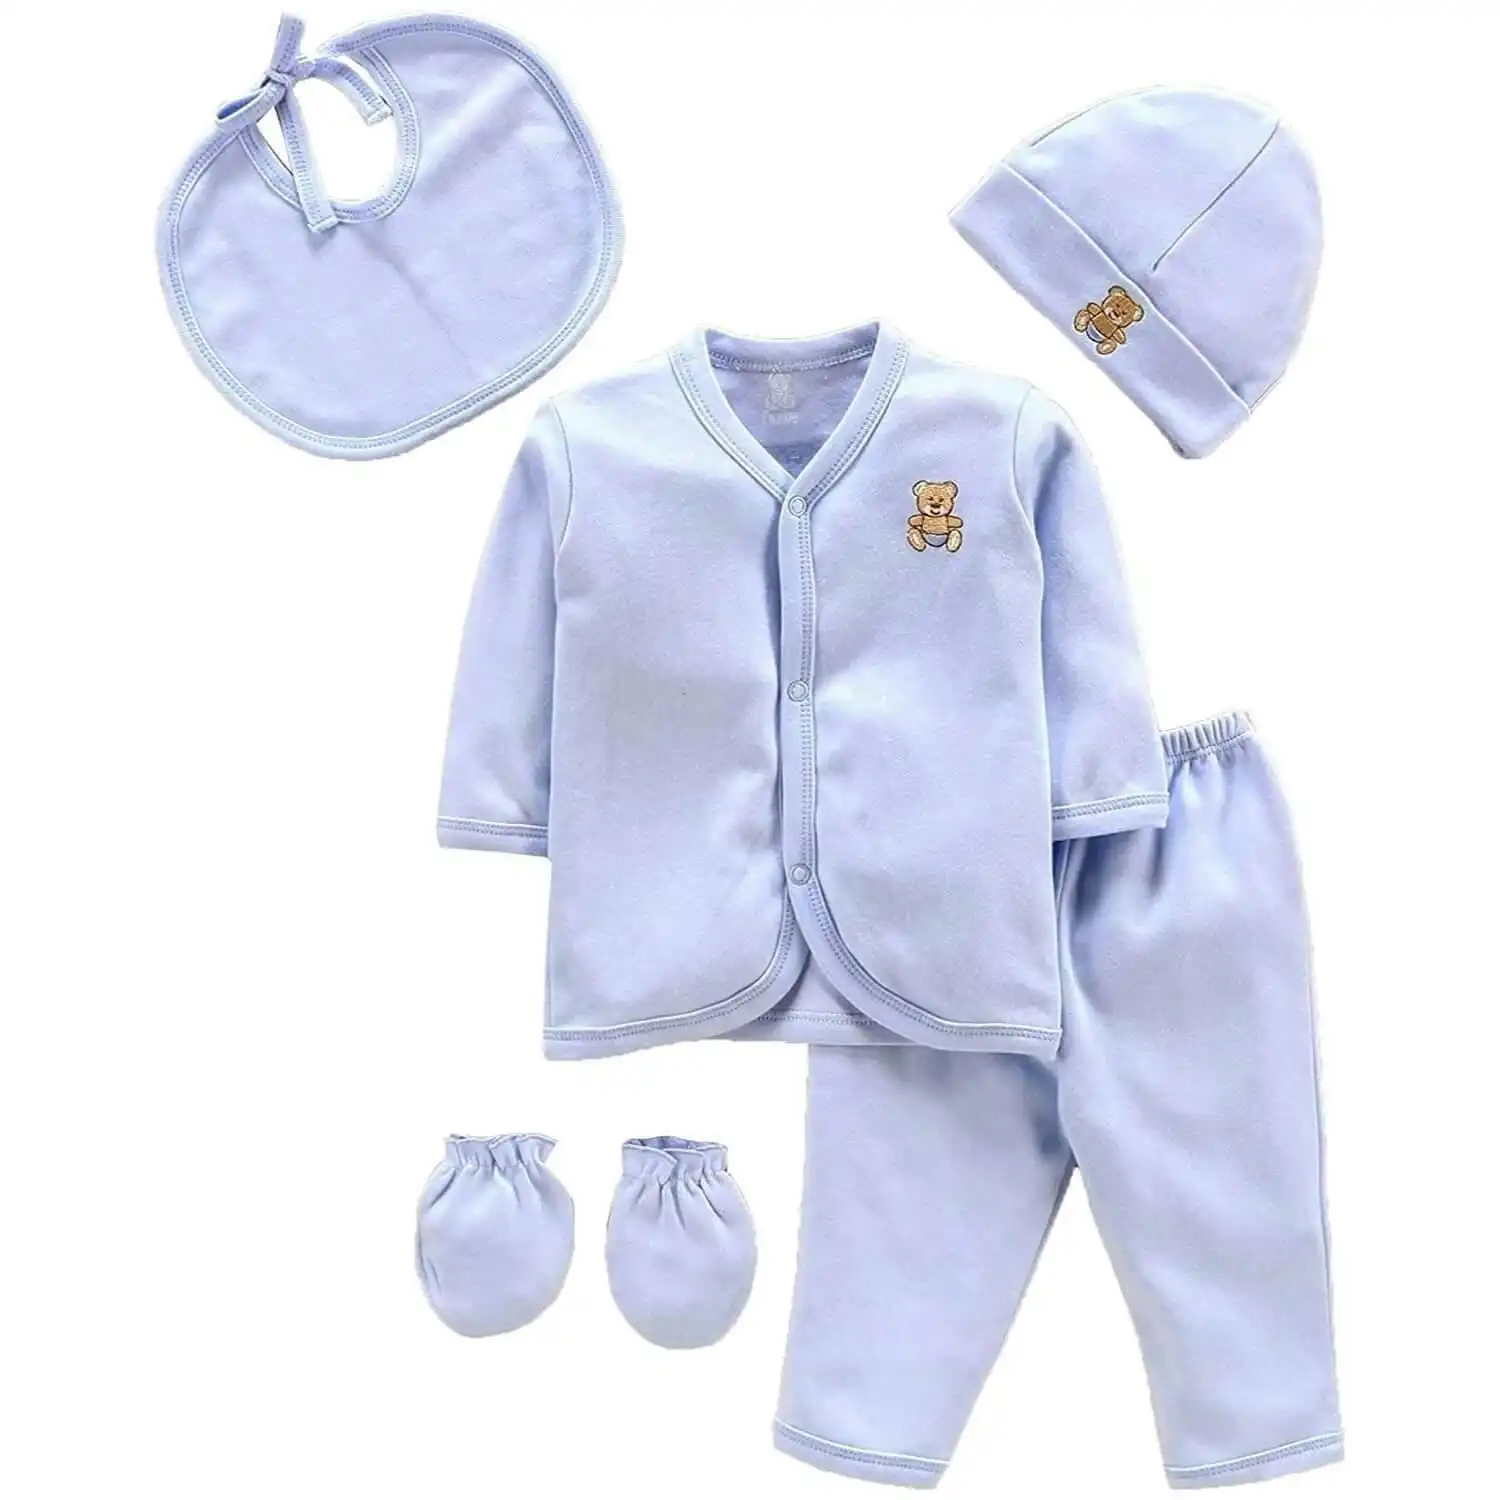 BabiesMart 5 Pieces Unisex Baby New Born Clothes Hospital Clothing Set